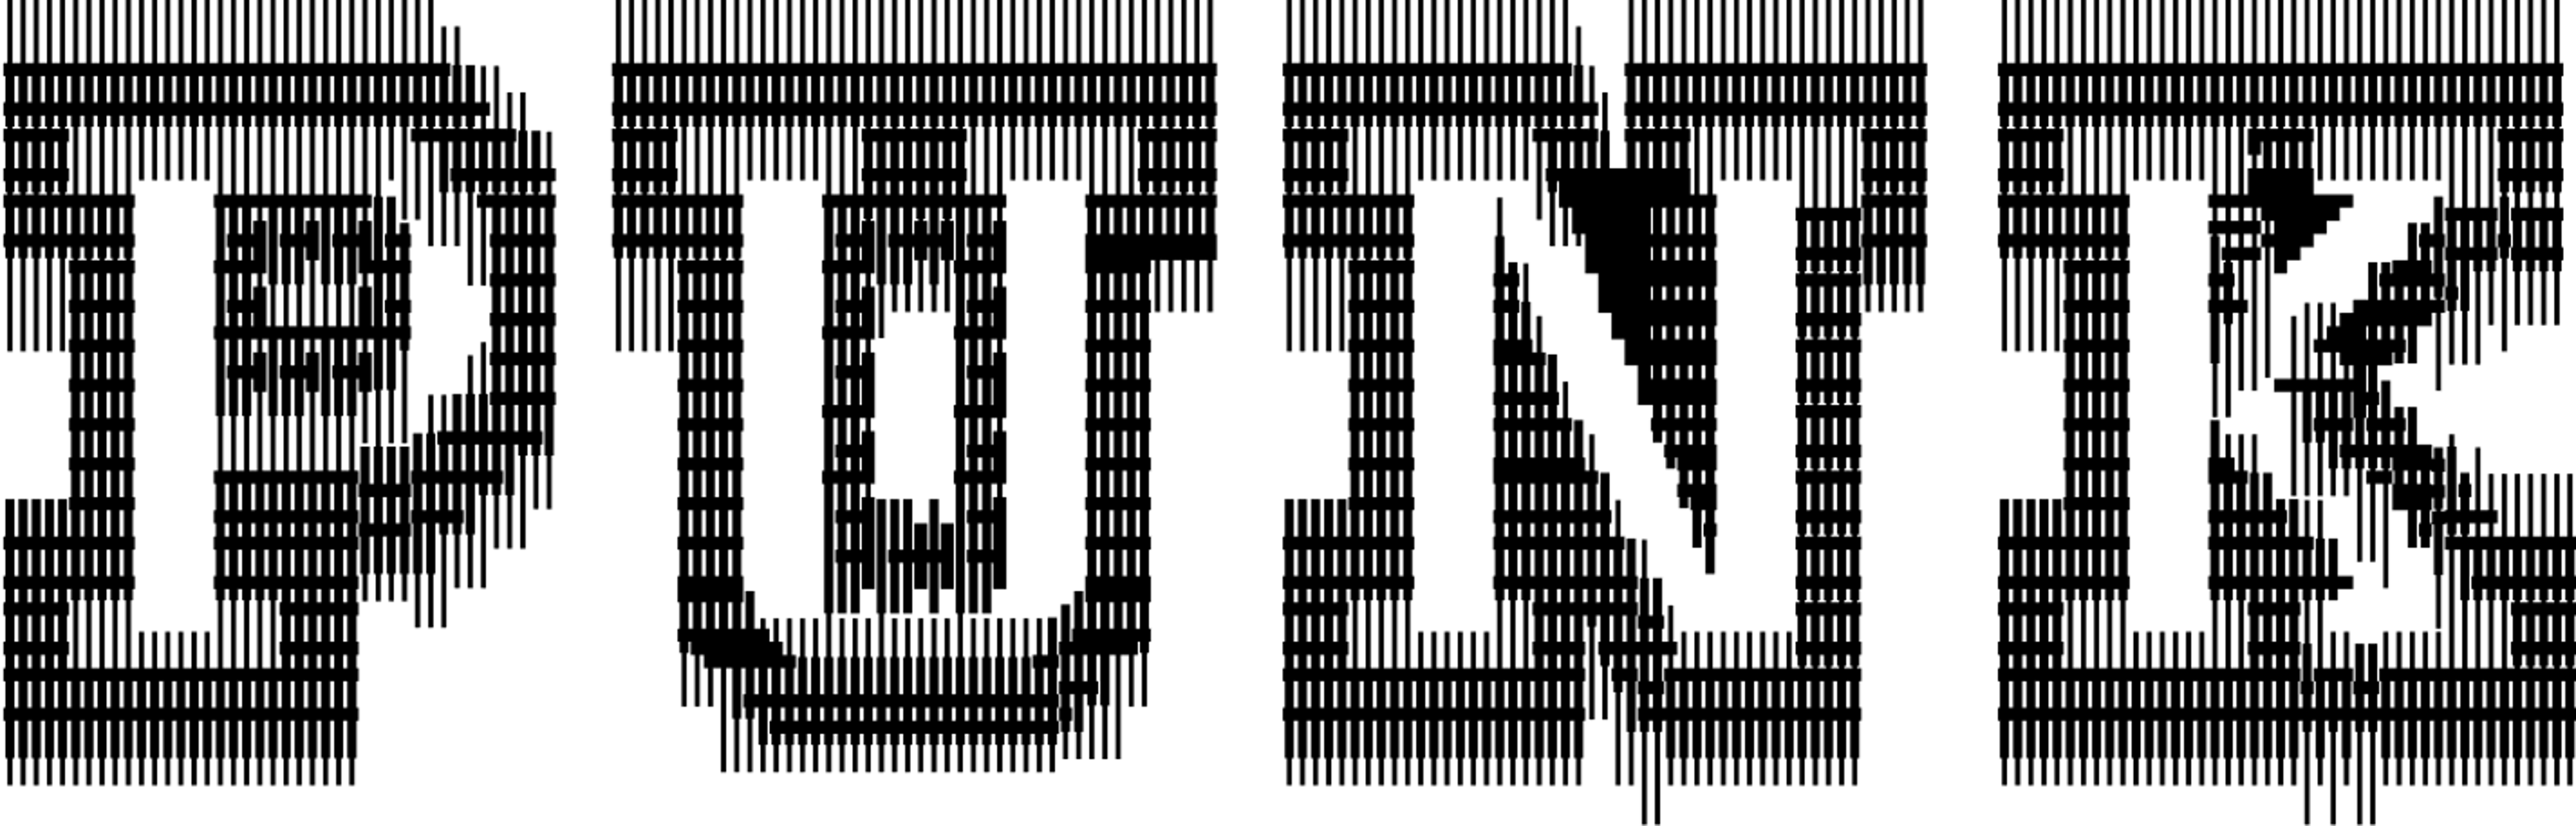 PUNK logo #857